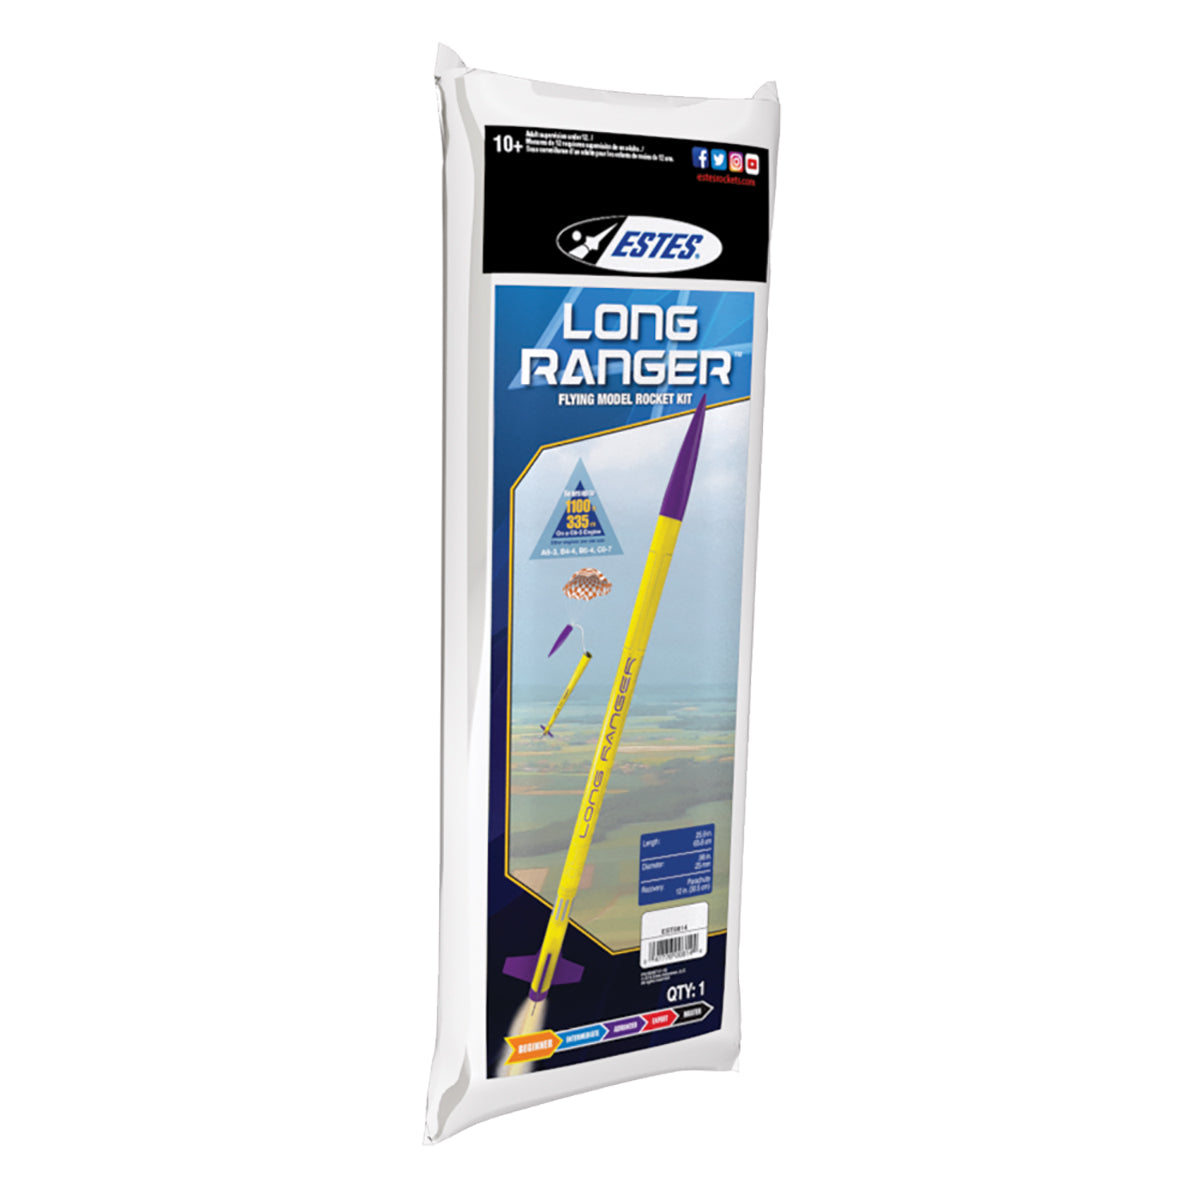 Estes Long Ranger Model Rocket Kit 